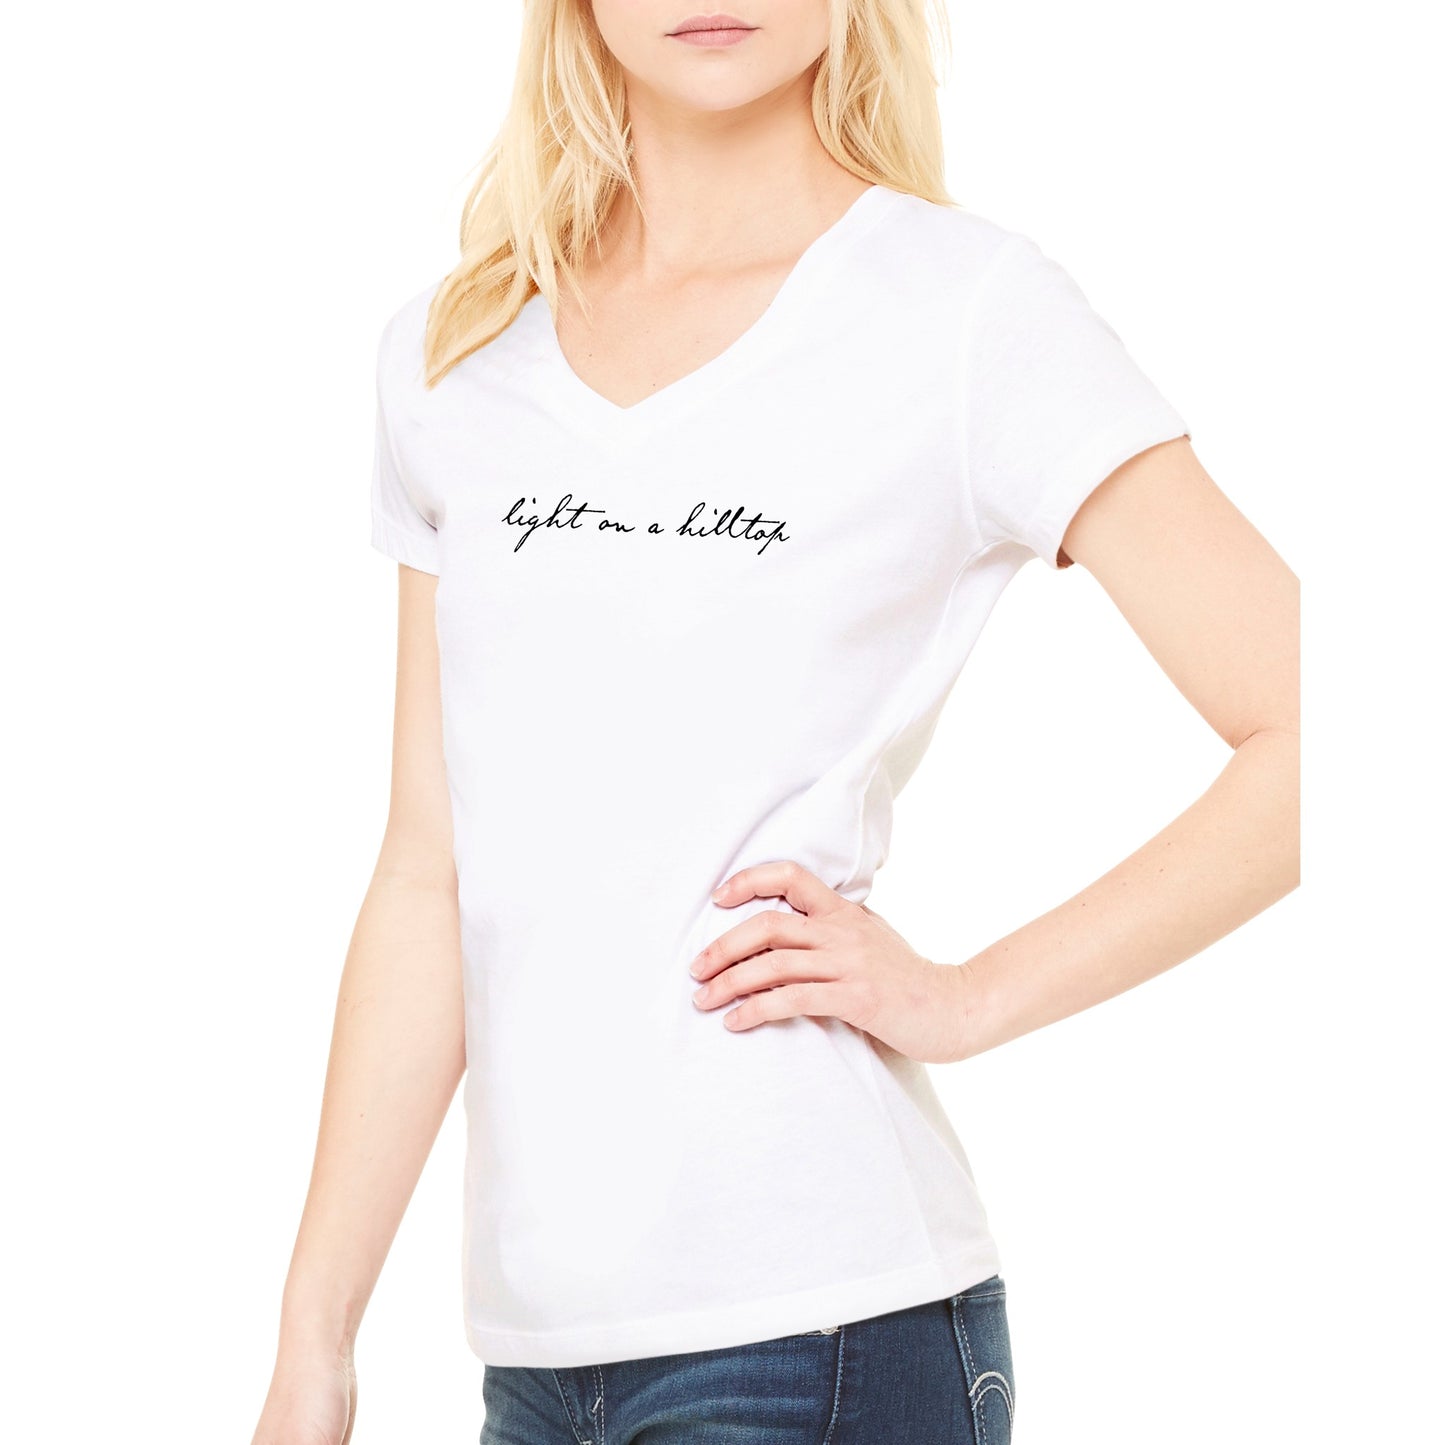 Light on a Hilltop  -  Women's V-Neck T-shirt